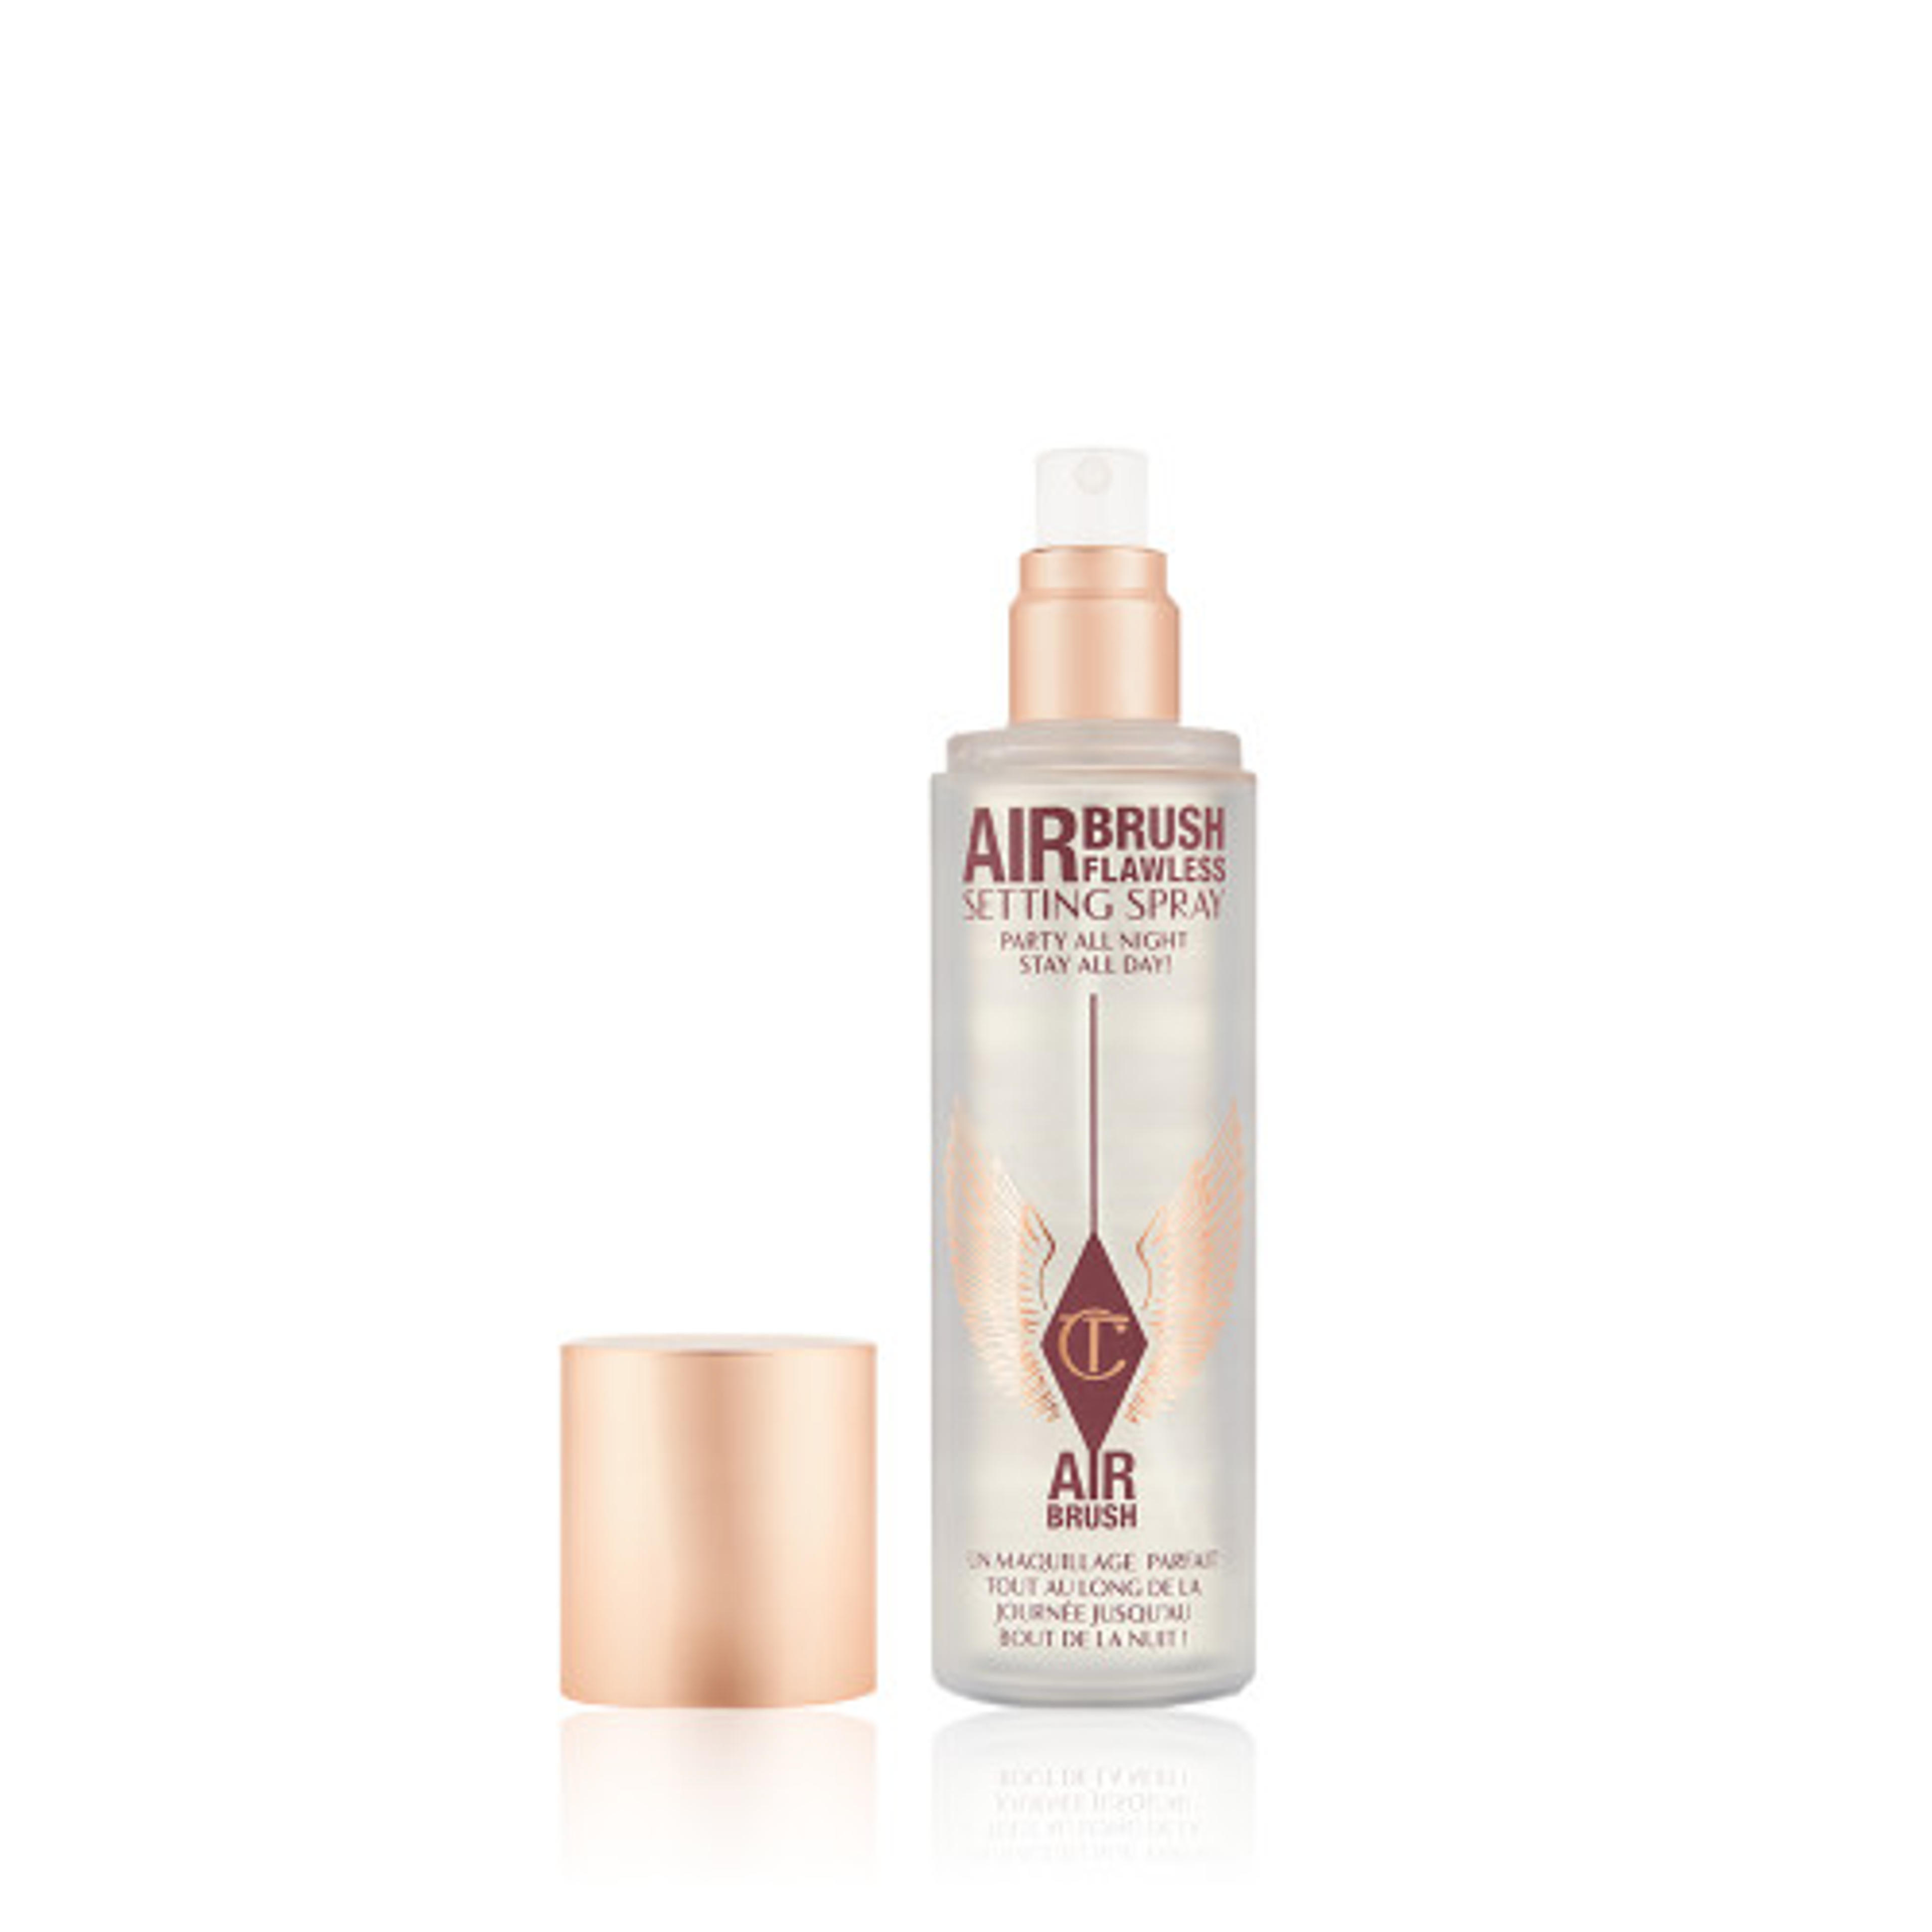 Airbrush Flawless Setting Spray – Hydrating Setting Spray | Charlotte Tilbury